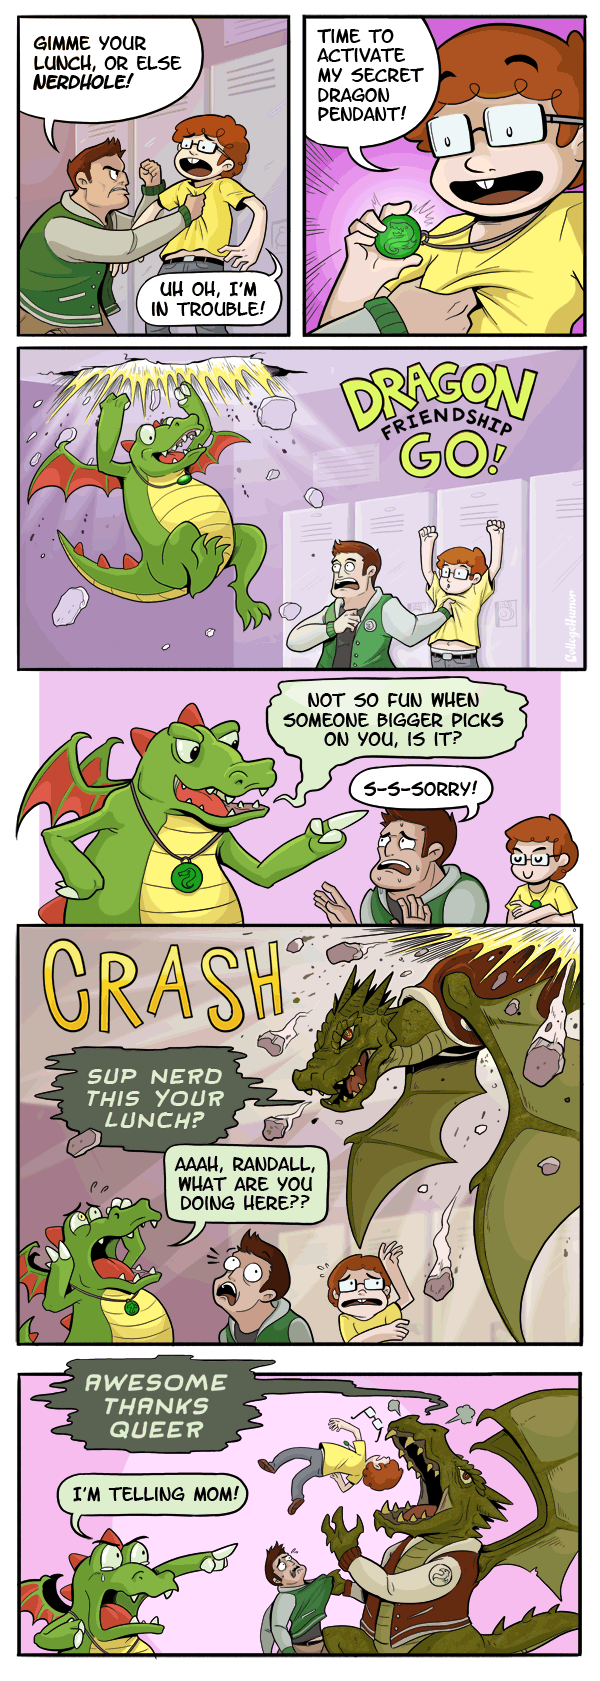 Dragons vs. Bullies (1 gif)